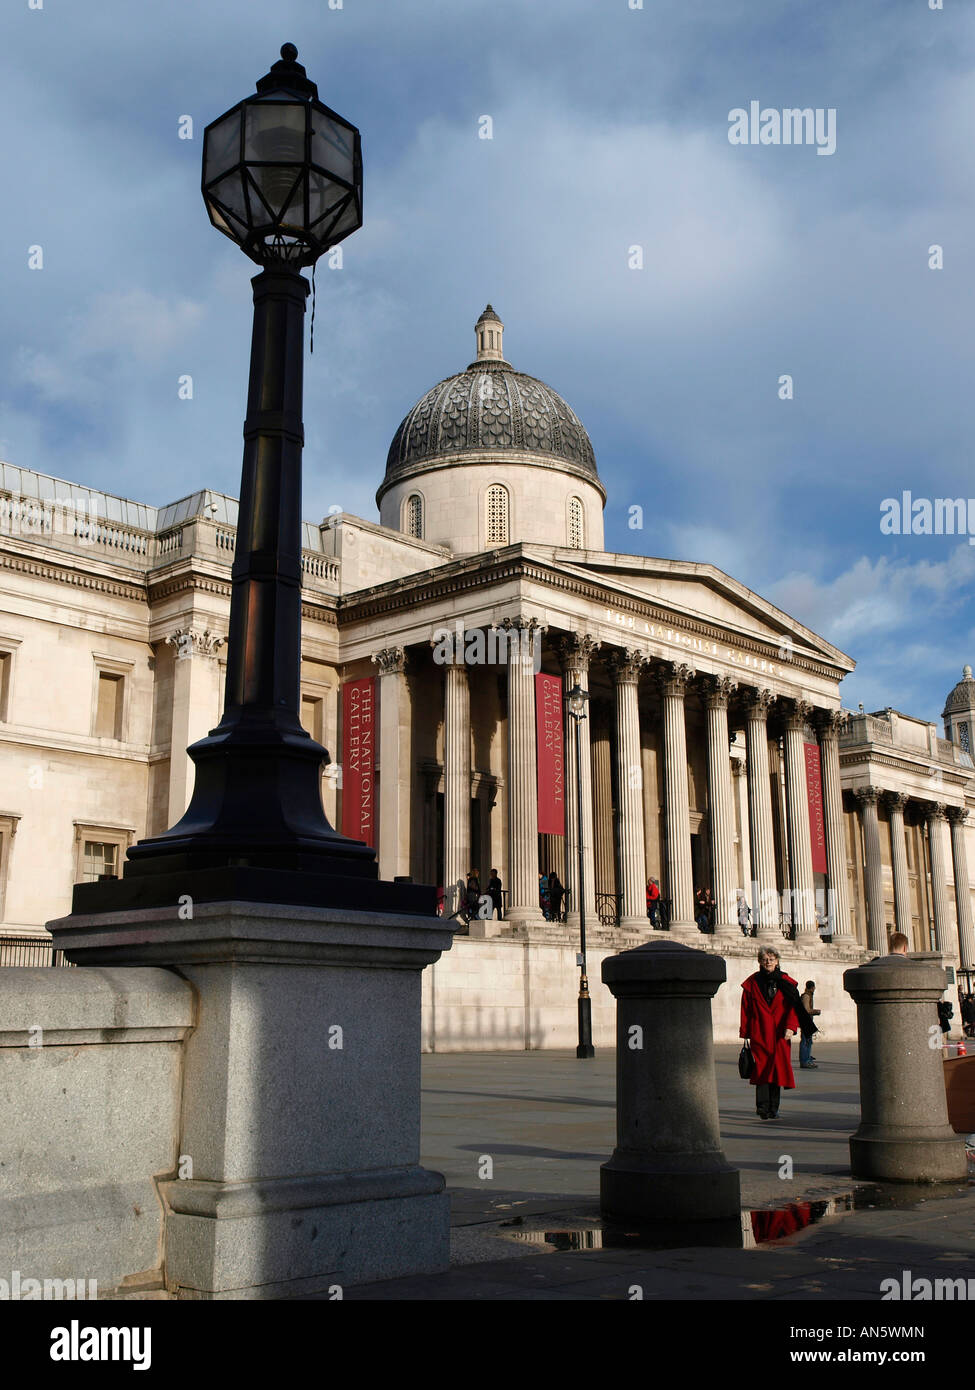 National Gallery Trafalgar Square London UK united Kingdom GB Stock Photo